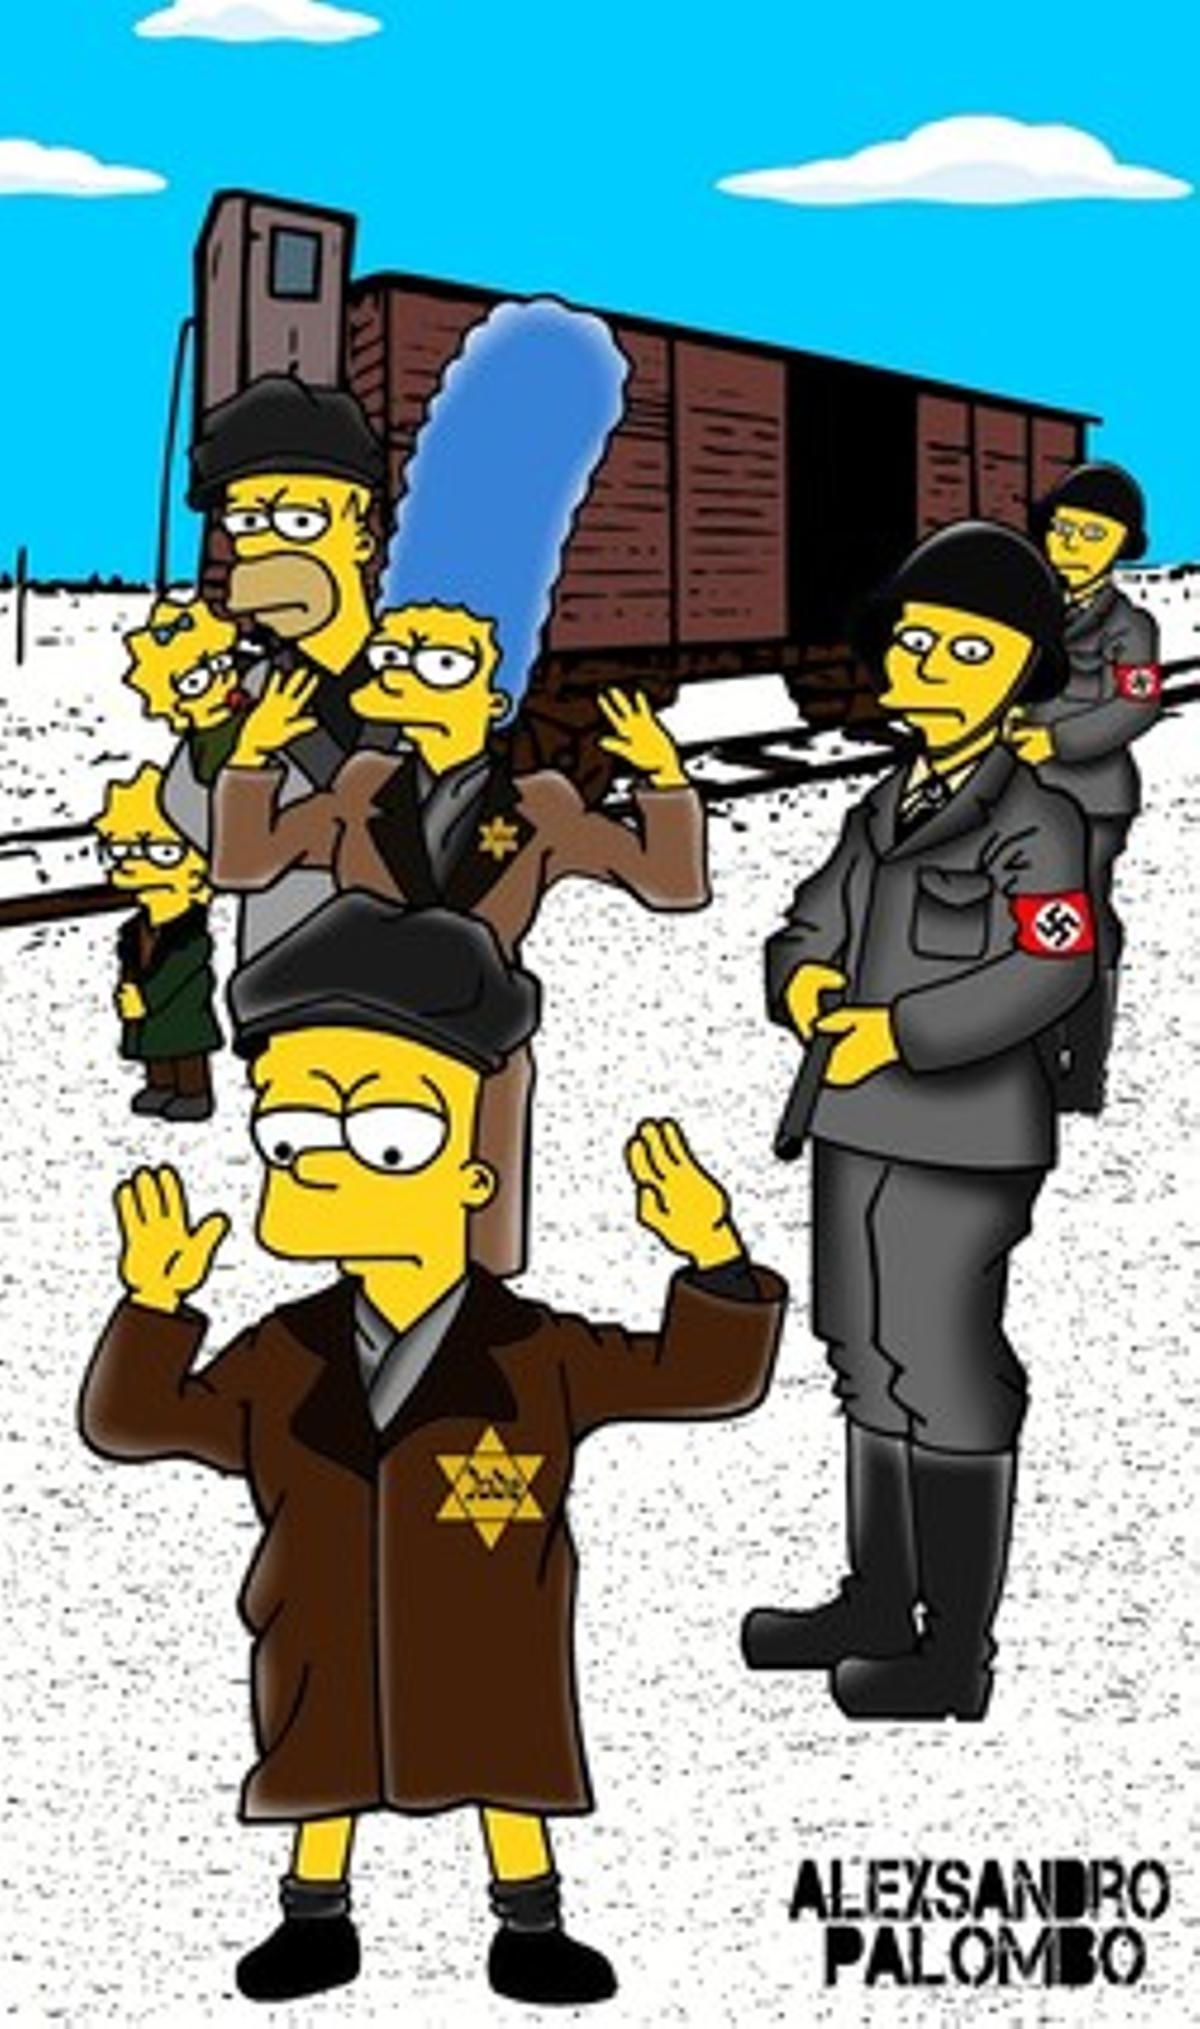 Els Simpson davant de les instal·lacions d’Auschwitz-Birkenau.